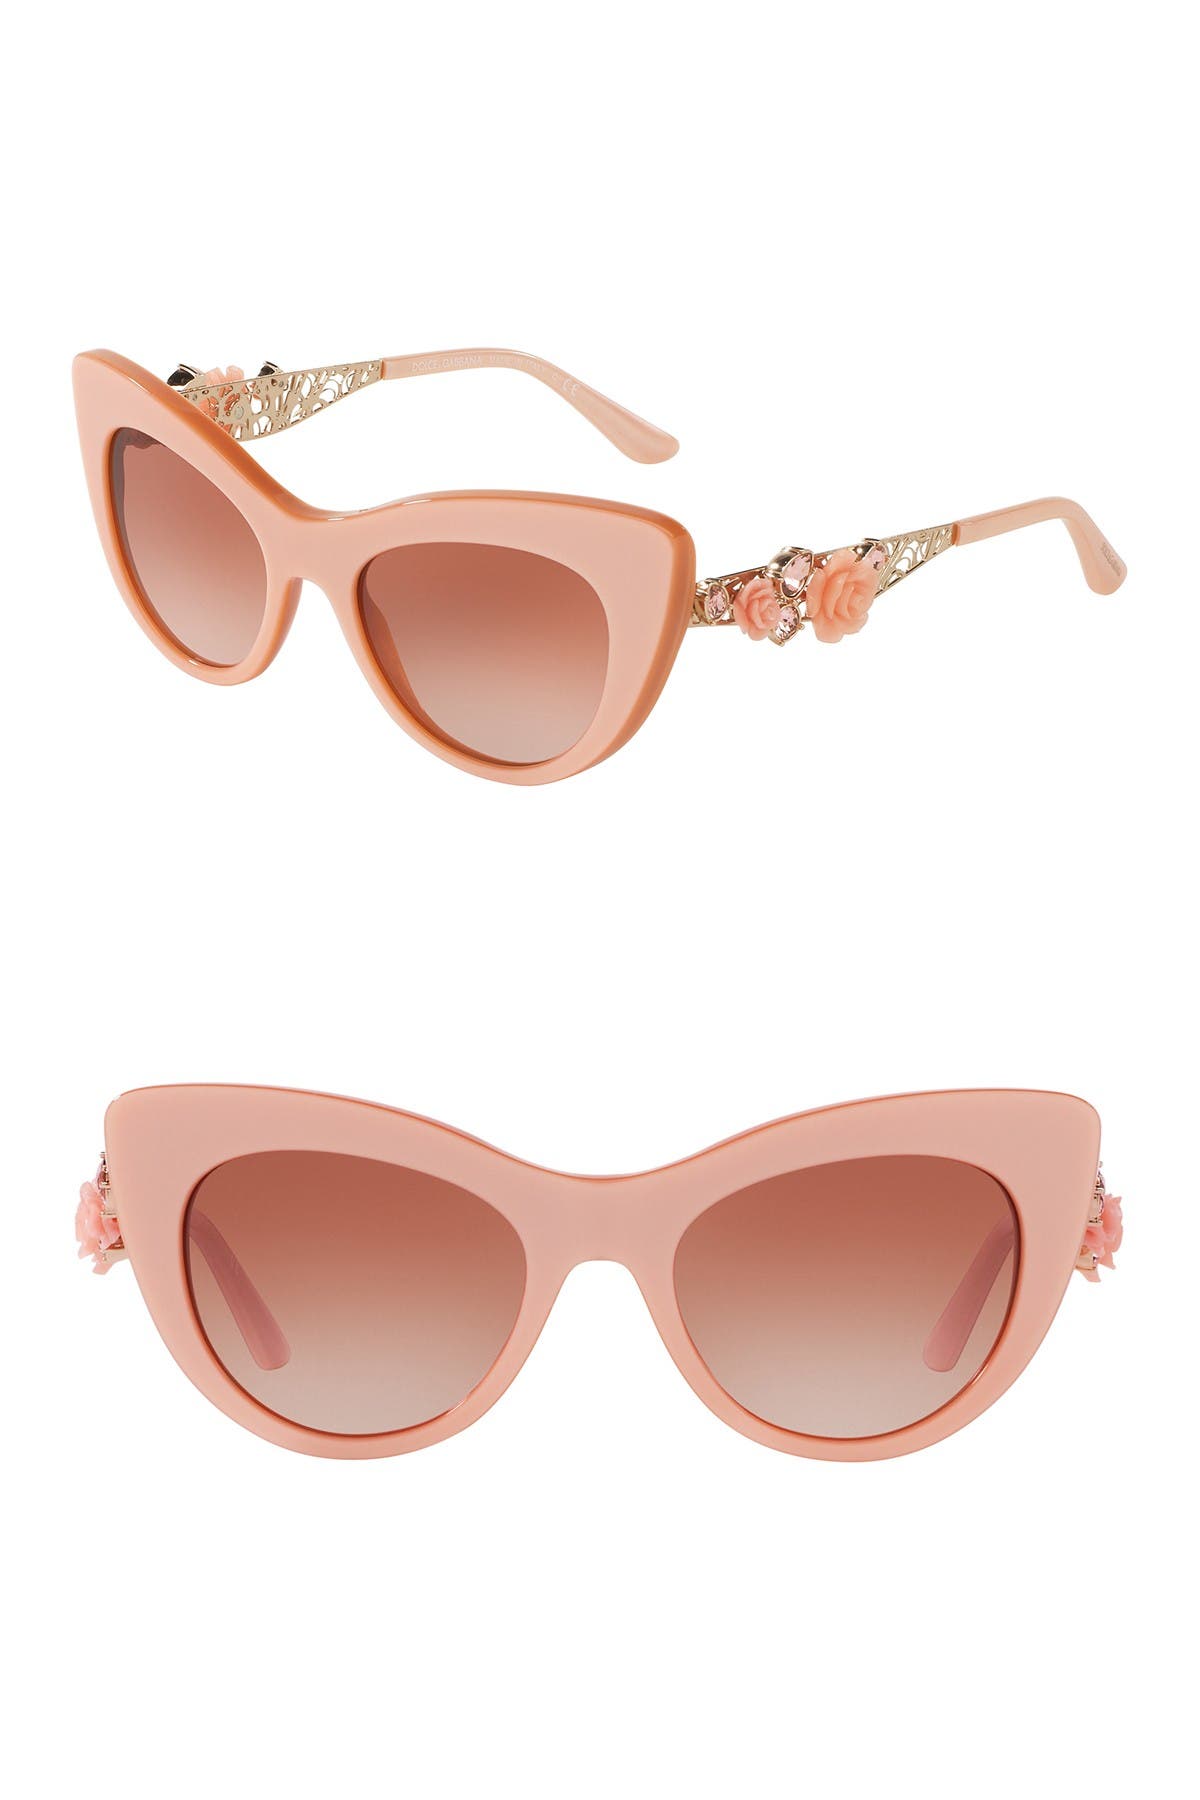 dolce & gabbana 50mm rose cat eye sunglasses